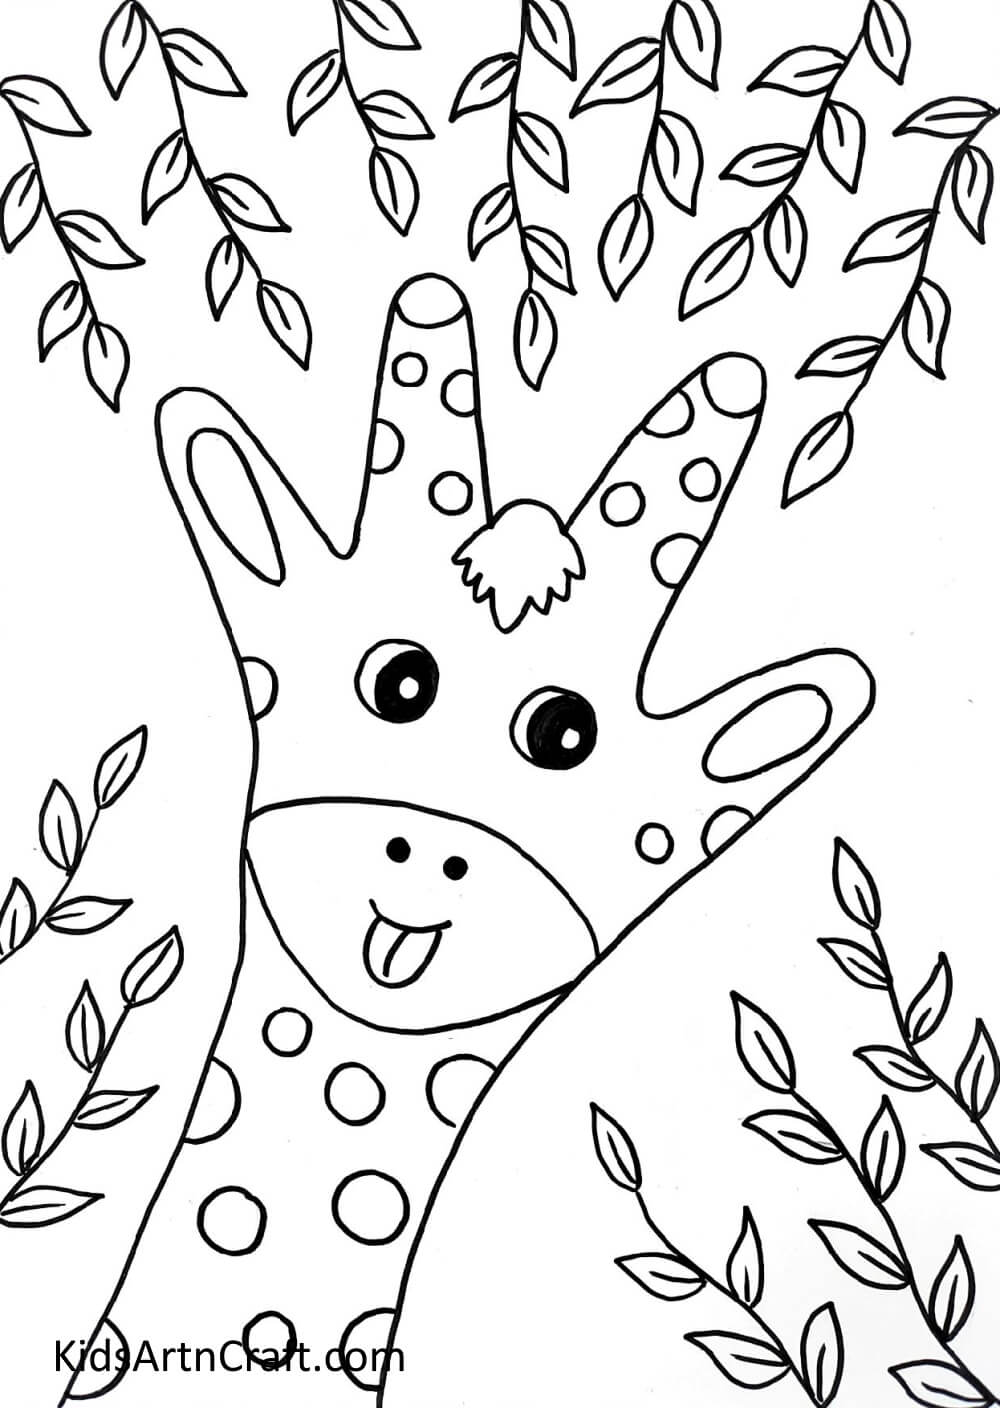 Drawing Leaves - A straightforward Giraffe Handprint Drawing for children made fun! 